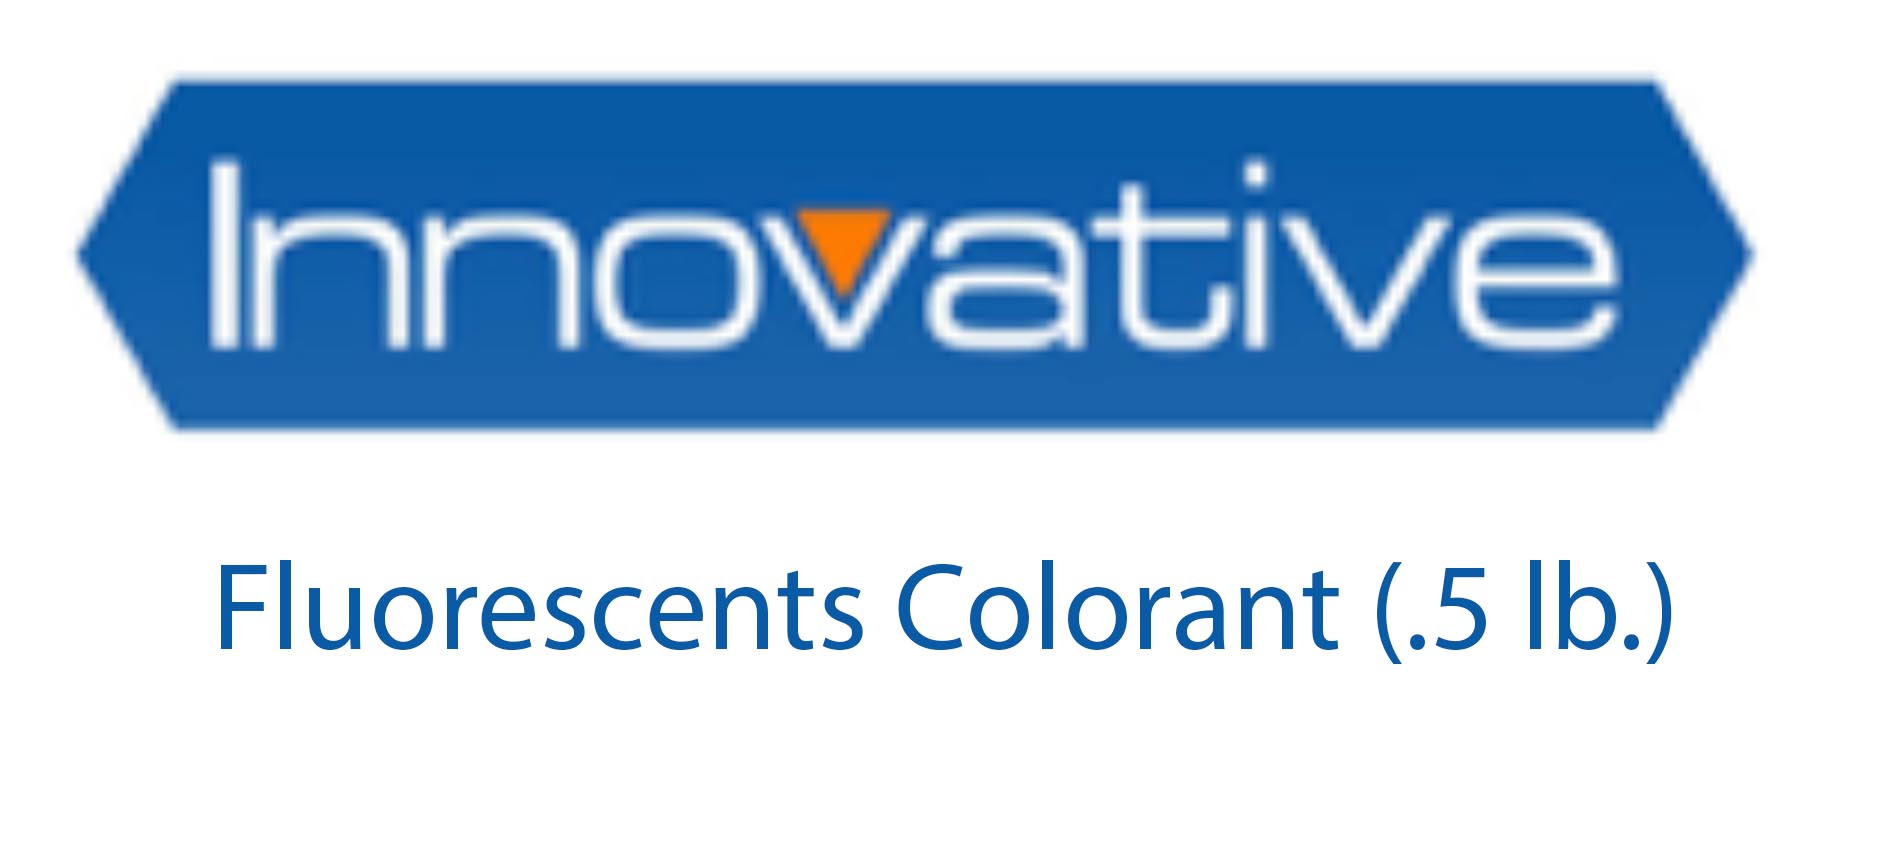 Fluorescents Colorant (.5 lb.) Units available!